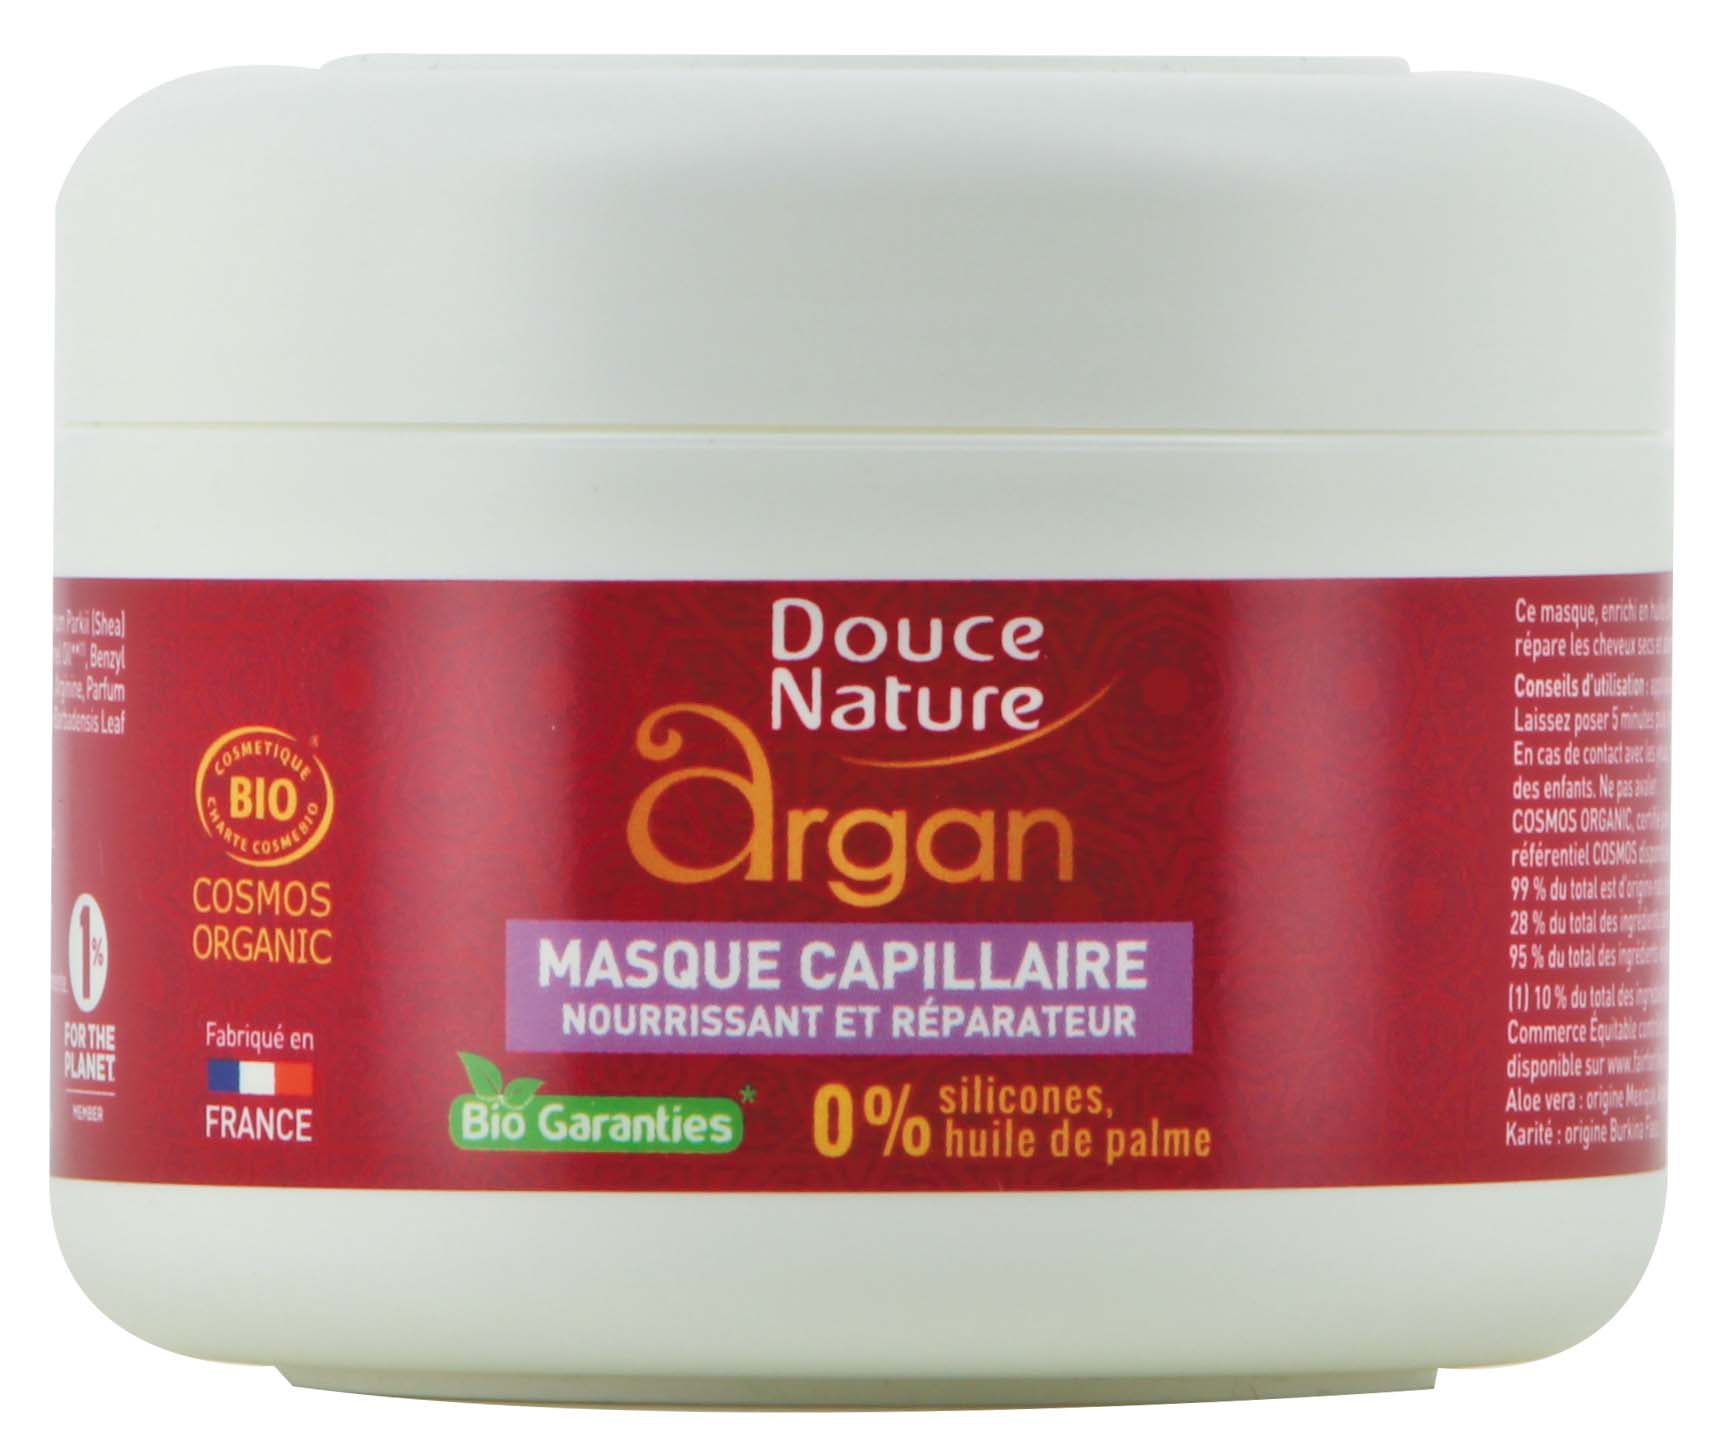 DOUCE NATURE ARGAN Masque Capillaire - 200 ml